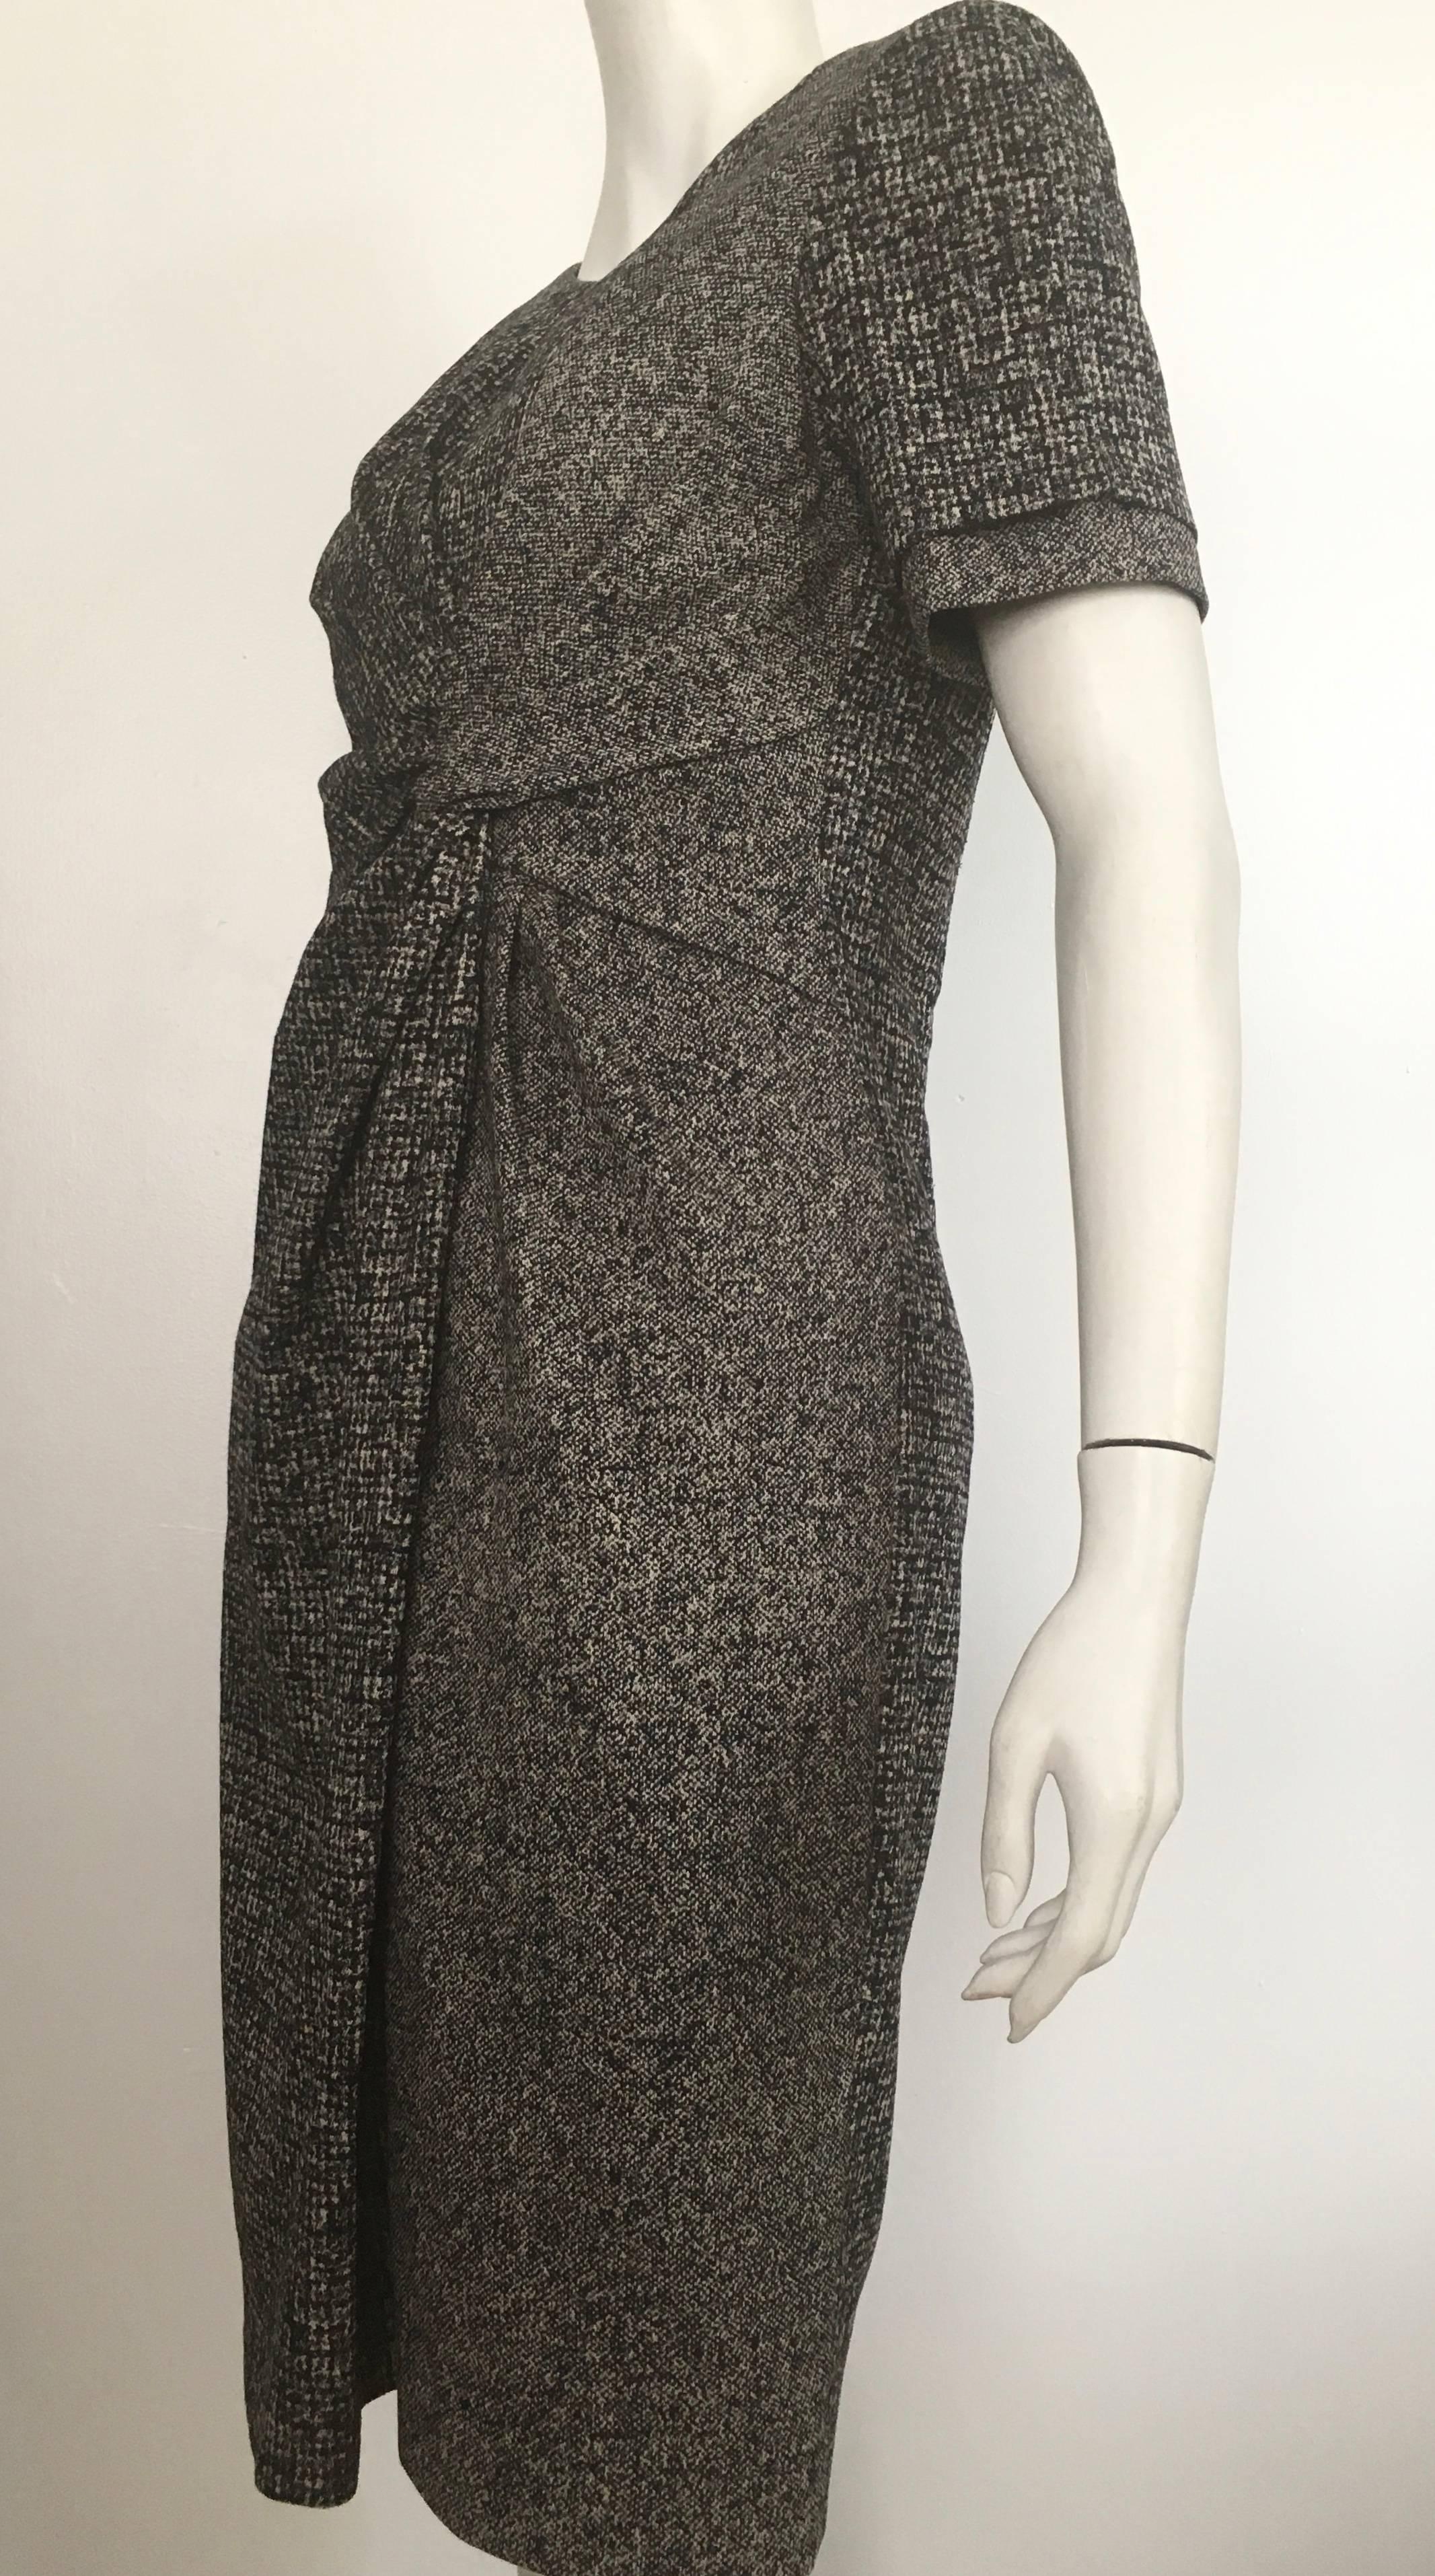 Paule Ka cotton black & grey short sleeve casual dress is a size 42 and fits like an USA size 10 / 12.  The waist is 34